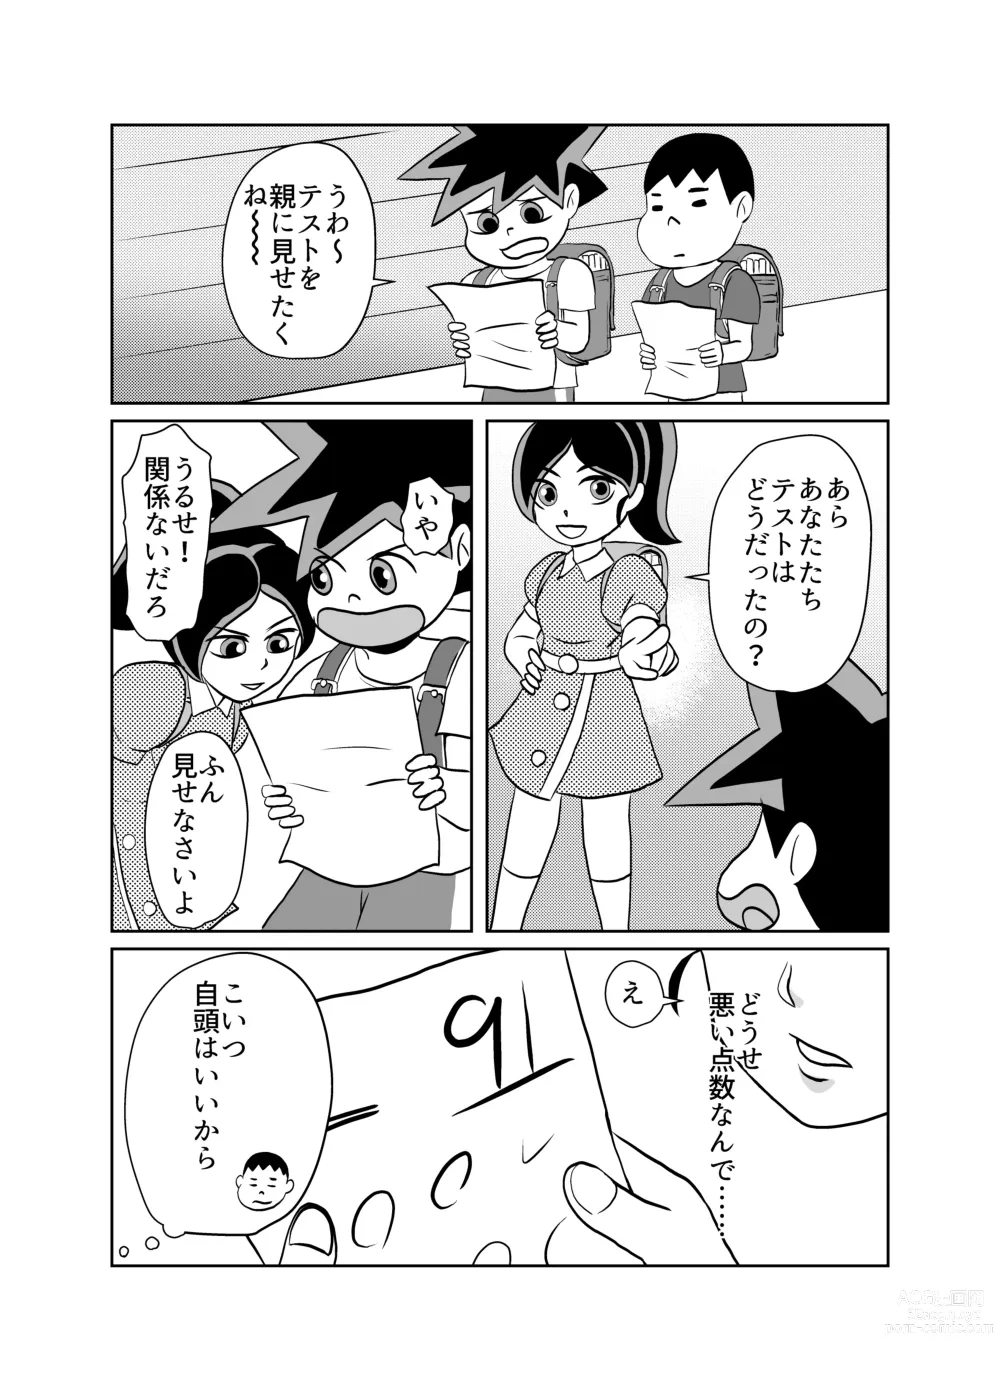 Page 7 of doujinshi Yuutousei no Hahaoya no Yowami o Nigitte NTR